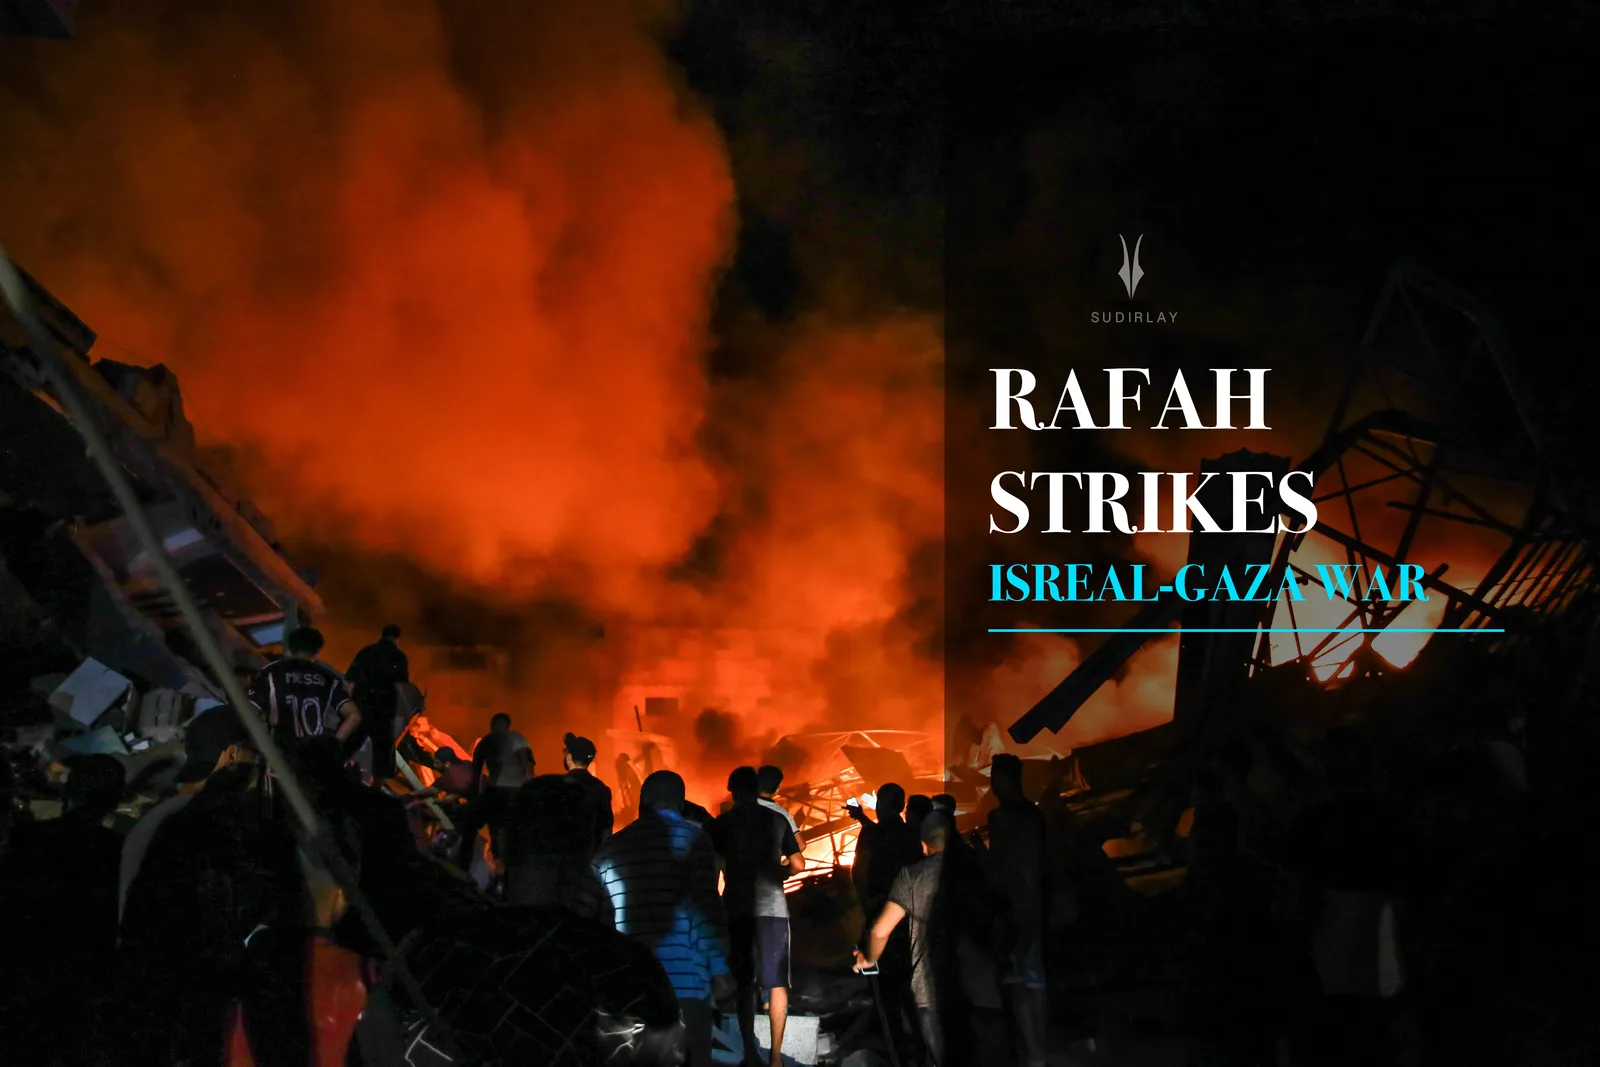 Israel Strikes Rafah Refugee Camp, Innocent Civilians Burned Alive - What Happened?